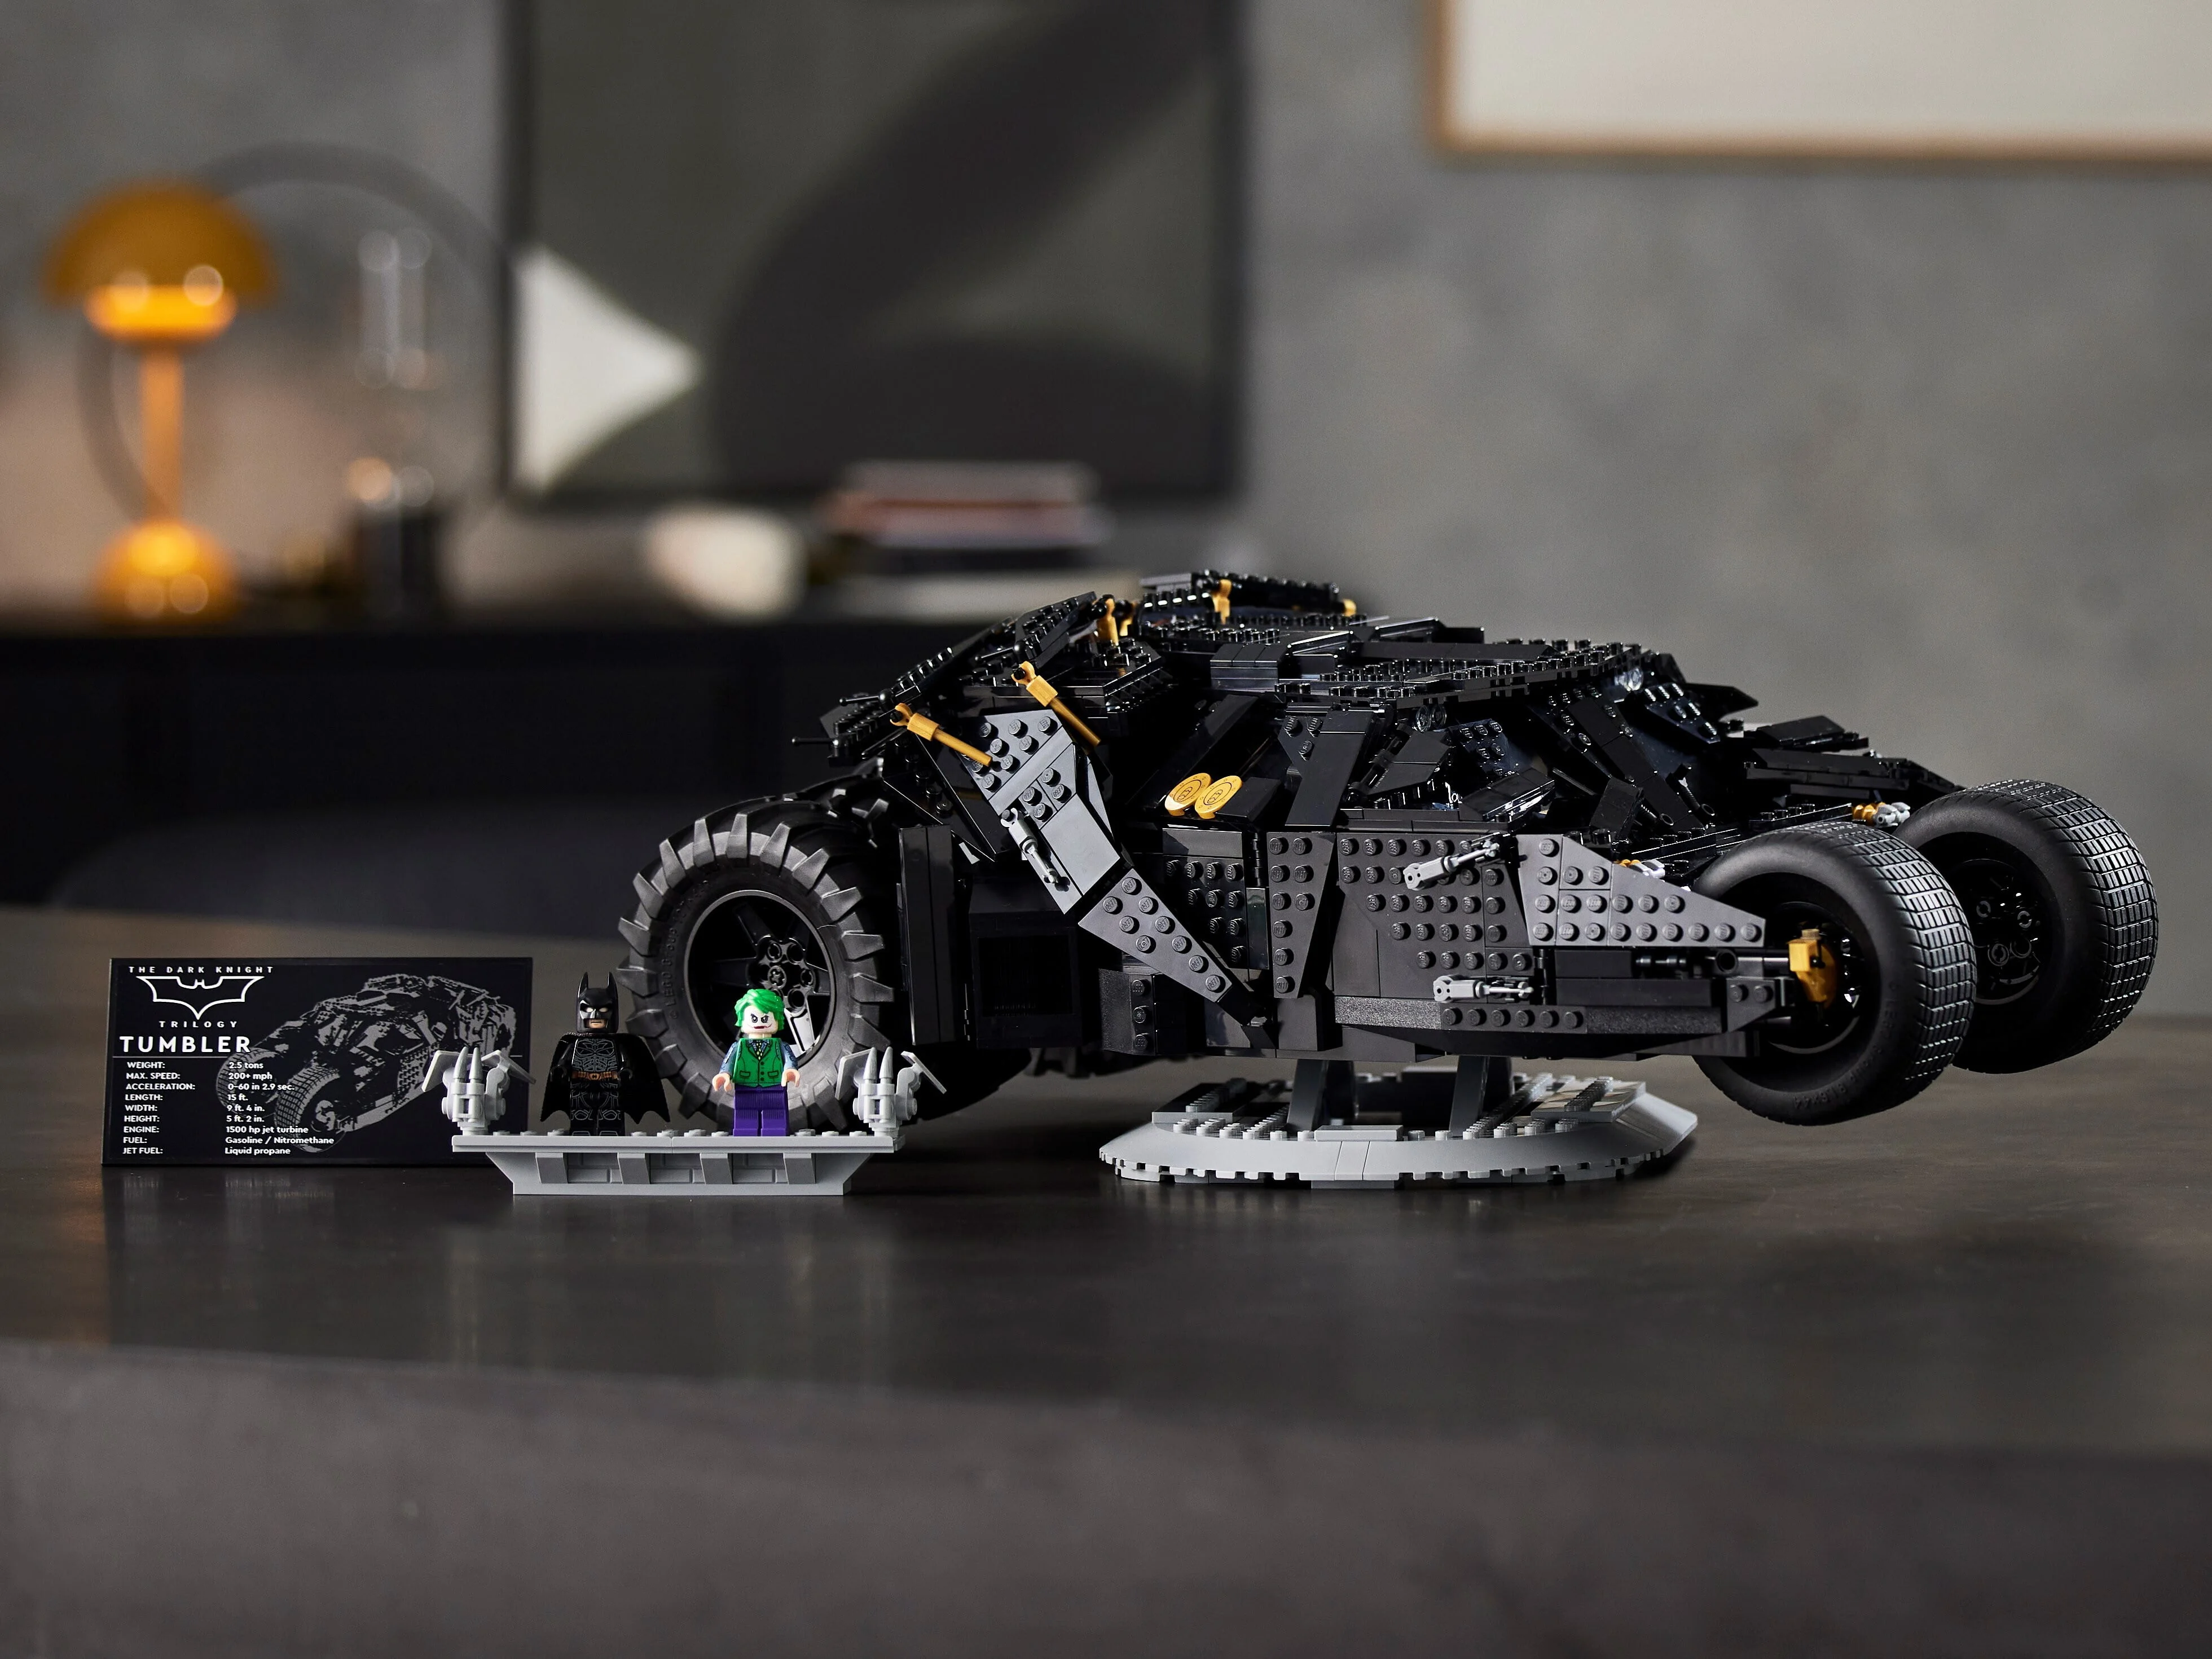 LEGO представил бэтмобиль «Тумблер» с фигурками Бэтмена и Джокера - фото 2